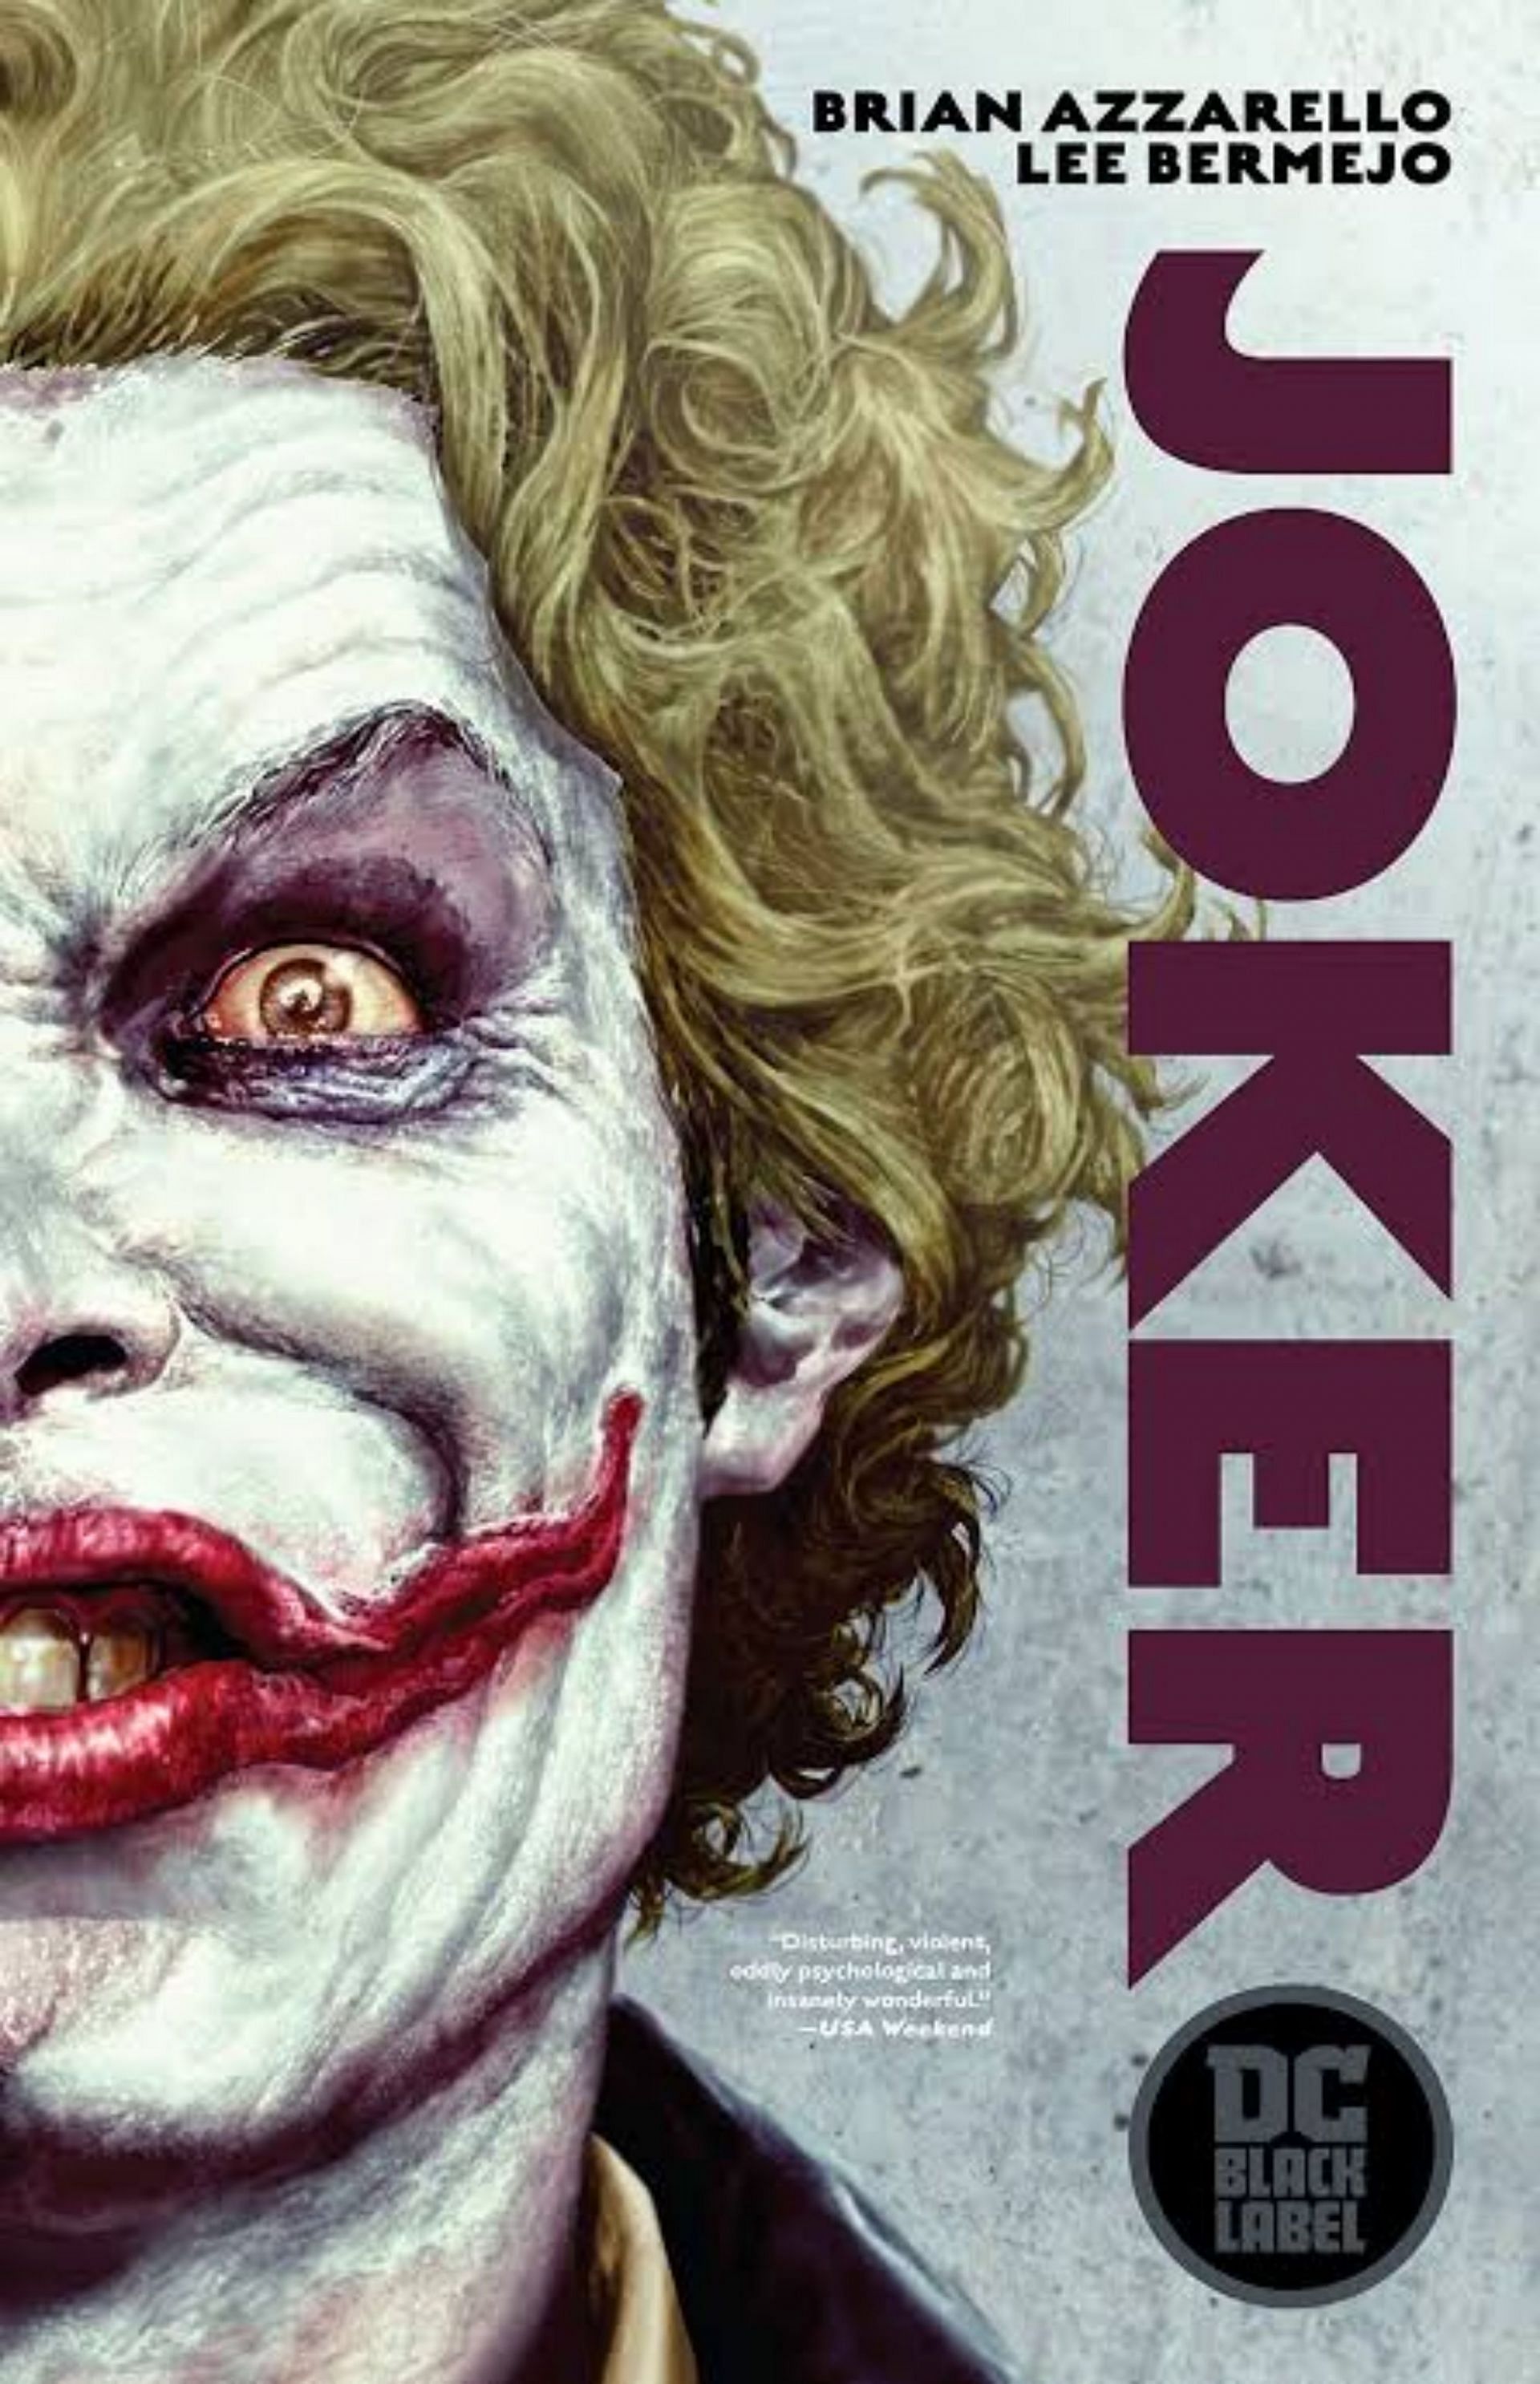 Comic book cover for Joker (Image via DC Comics)